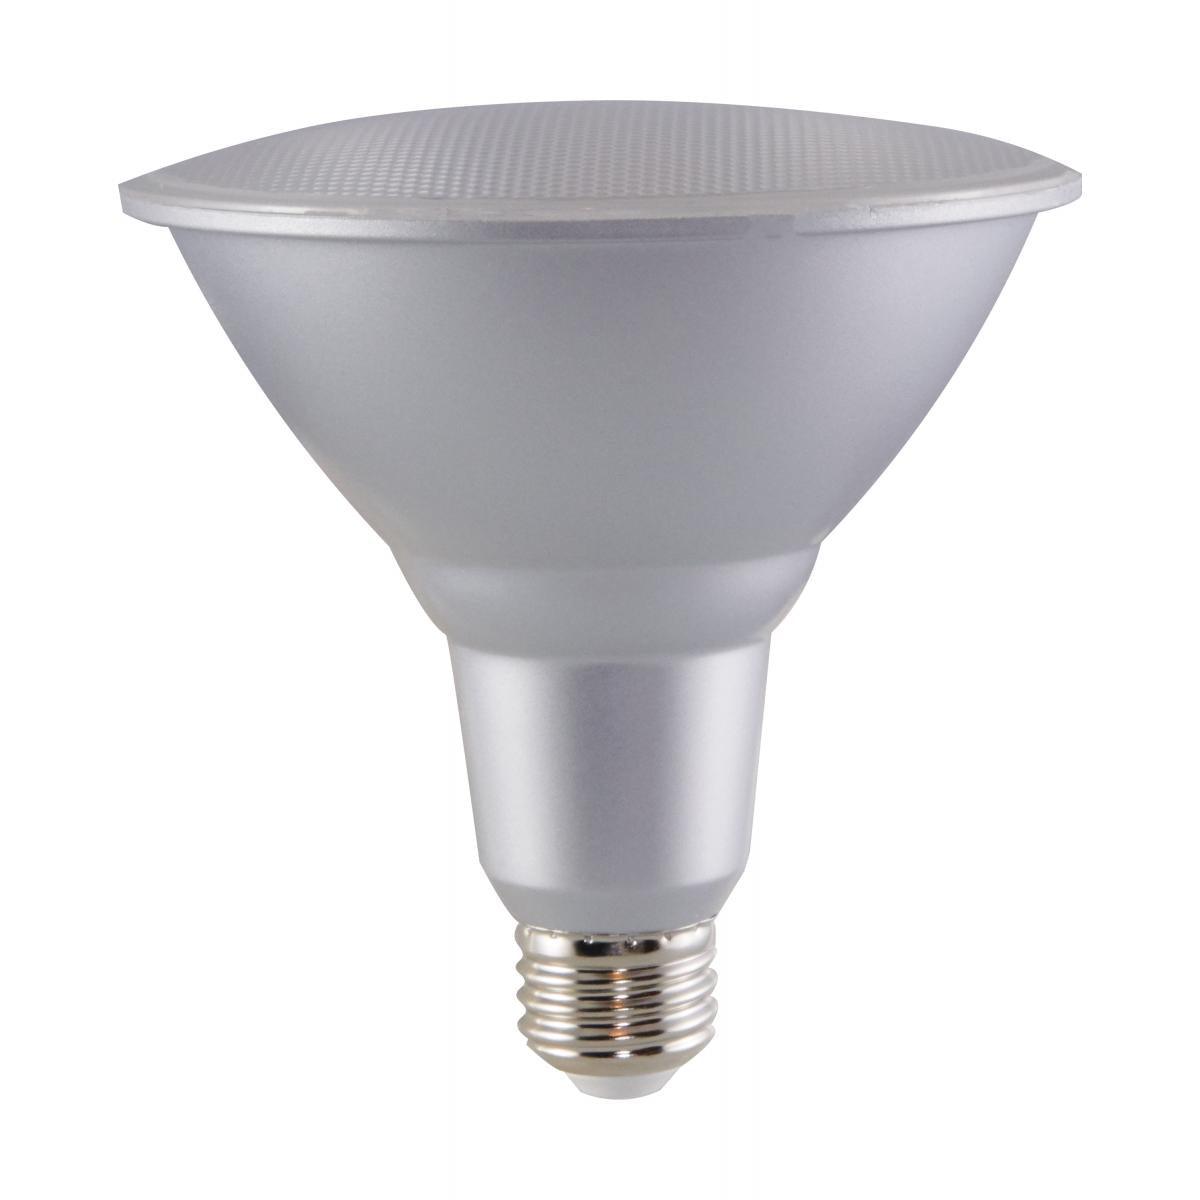 PAR38 Reflector LED Bulb, 17 watt, 1400 Lumens, 3000K, E26 Medium Base, 40 Deg. Flood